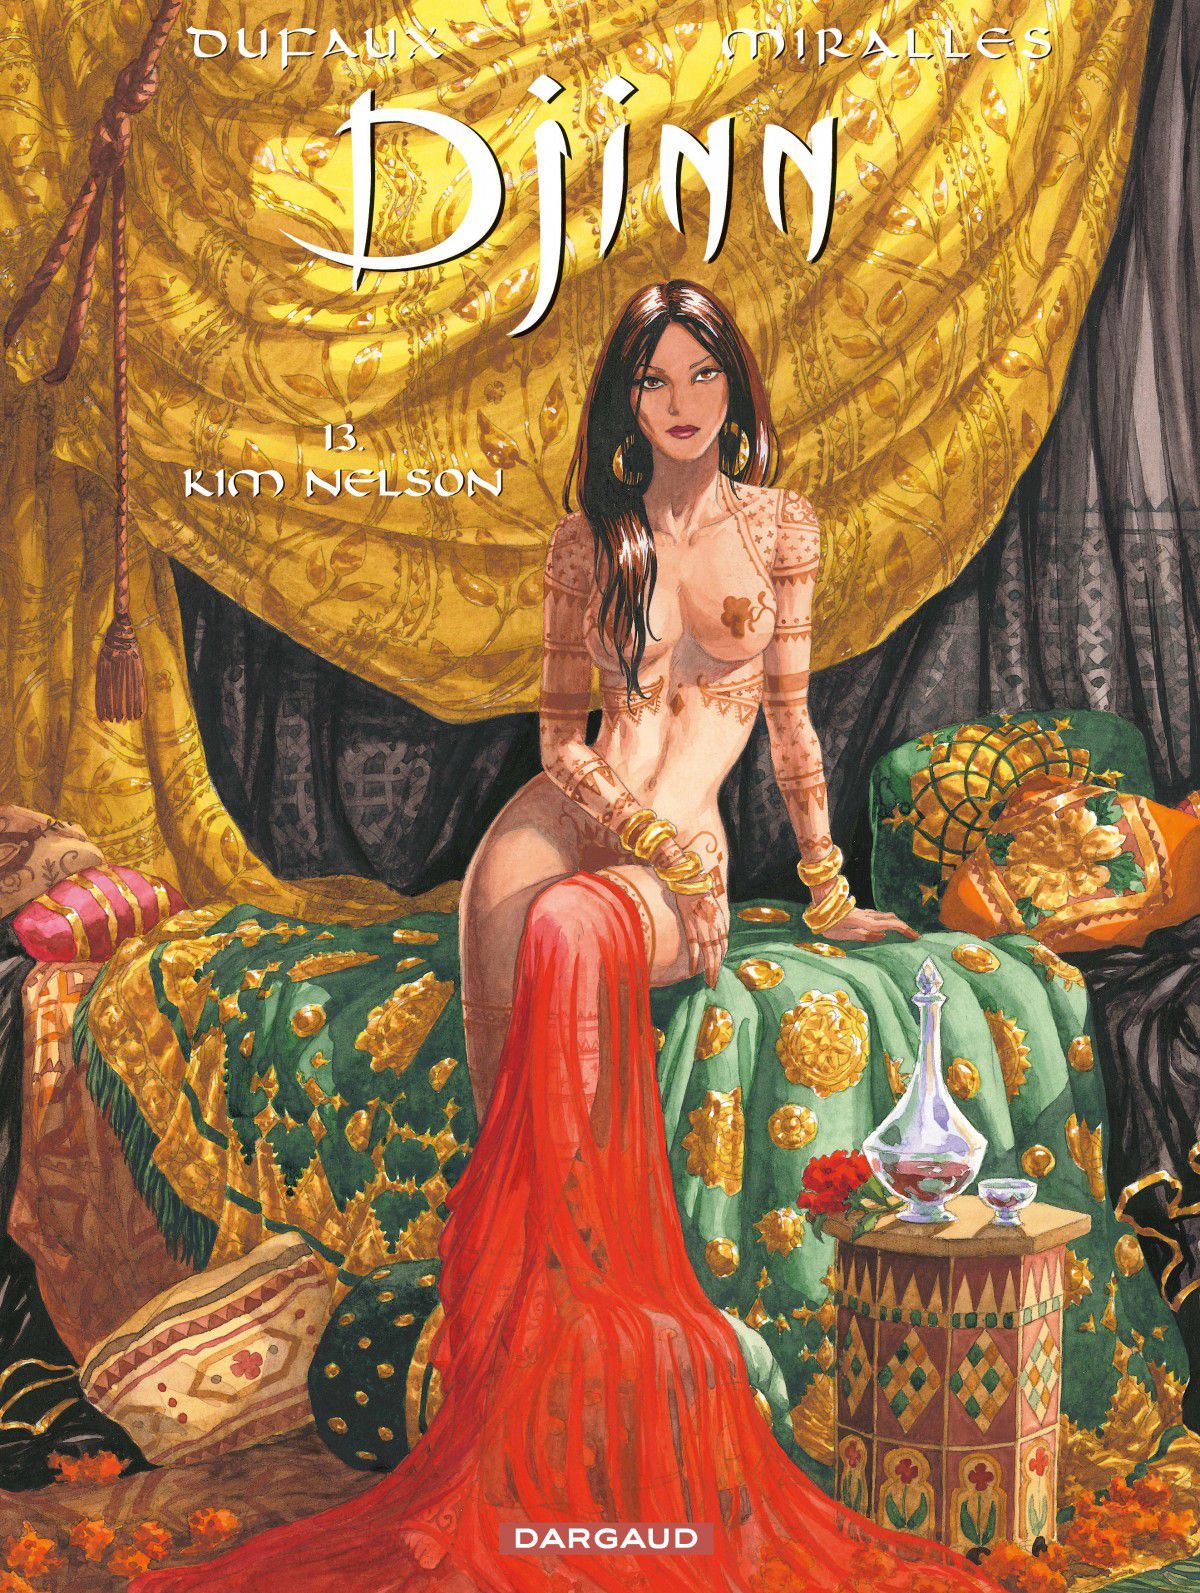 [Ana Miralles] Djinn - Volume #13: Kim Nelson [FRENCH] 1